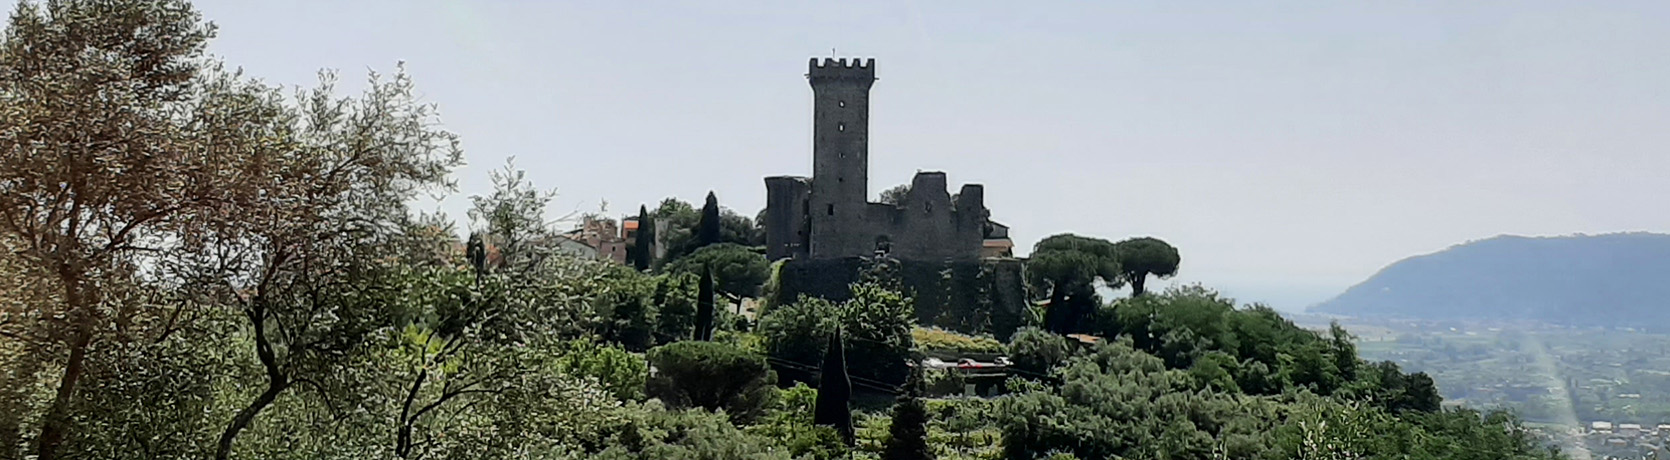 CastelnuovoMagra